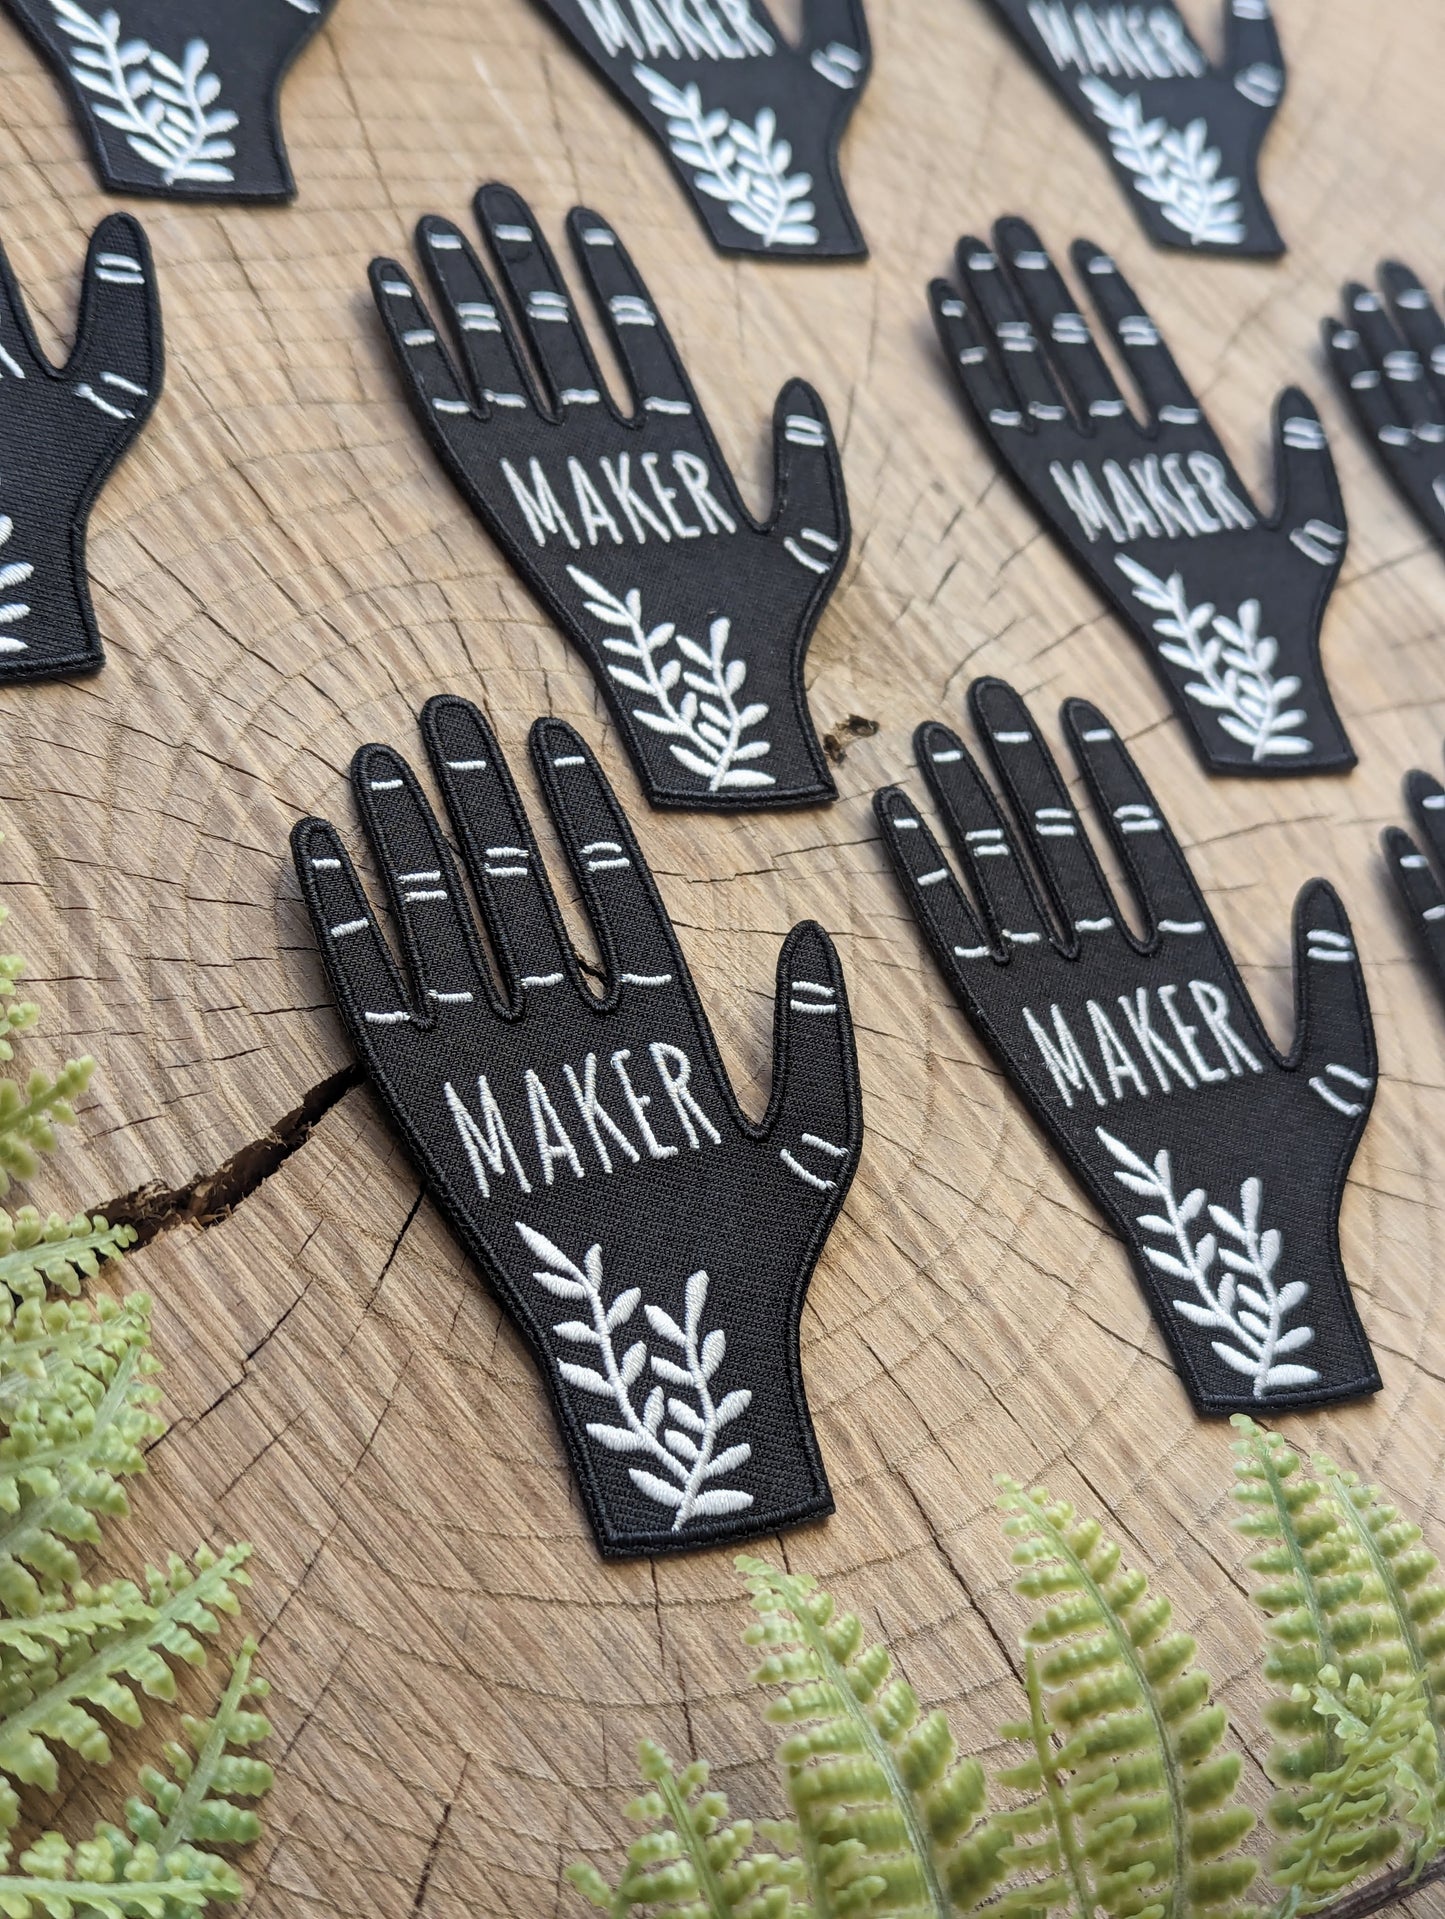 patch | hand maker